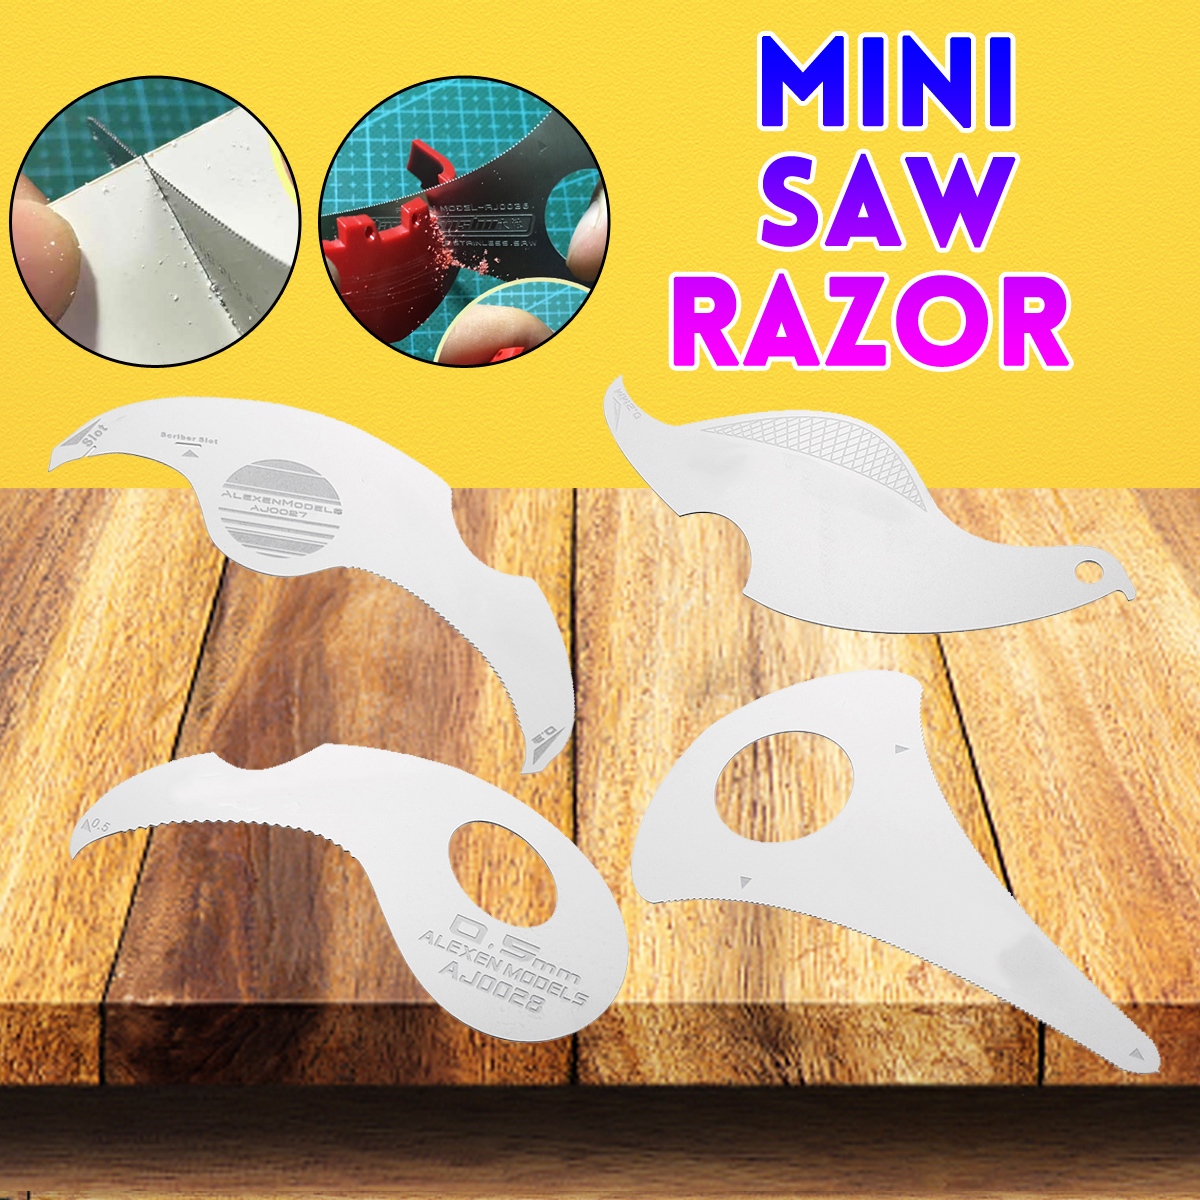 Mini-Handy-Craft-Metal-Saws-Mini-Saw-Razor-Saw-Tools-Modeling-Tool-1674902-2